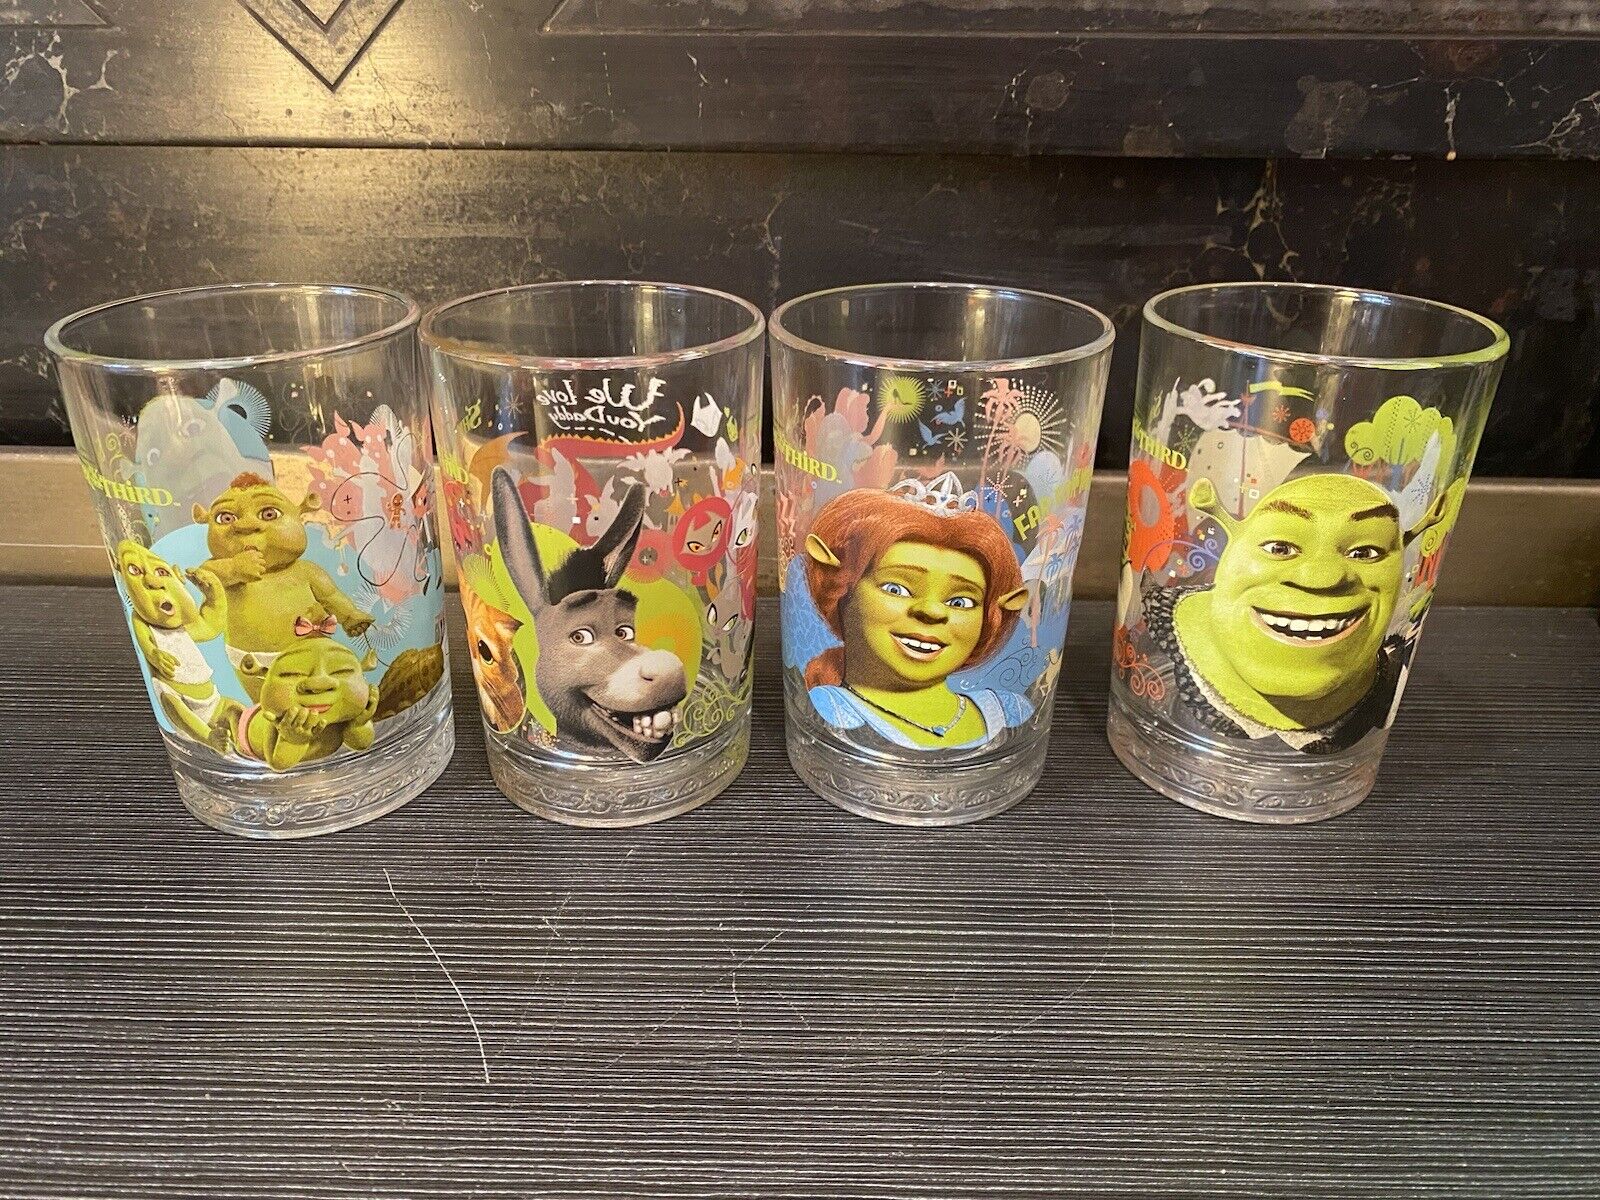 McDonalds Dreamworks 2007 Shrek the Third Collectors Glasses-Set of 4-Nice Set